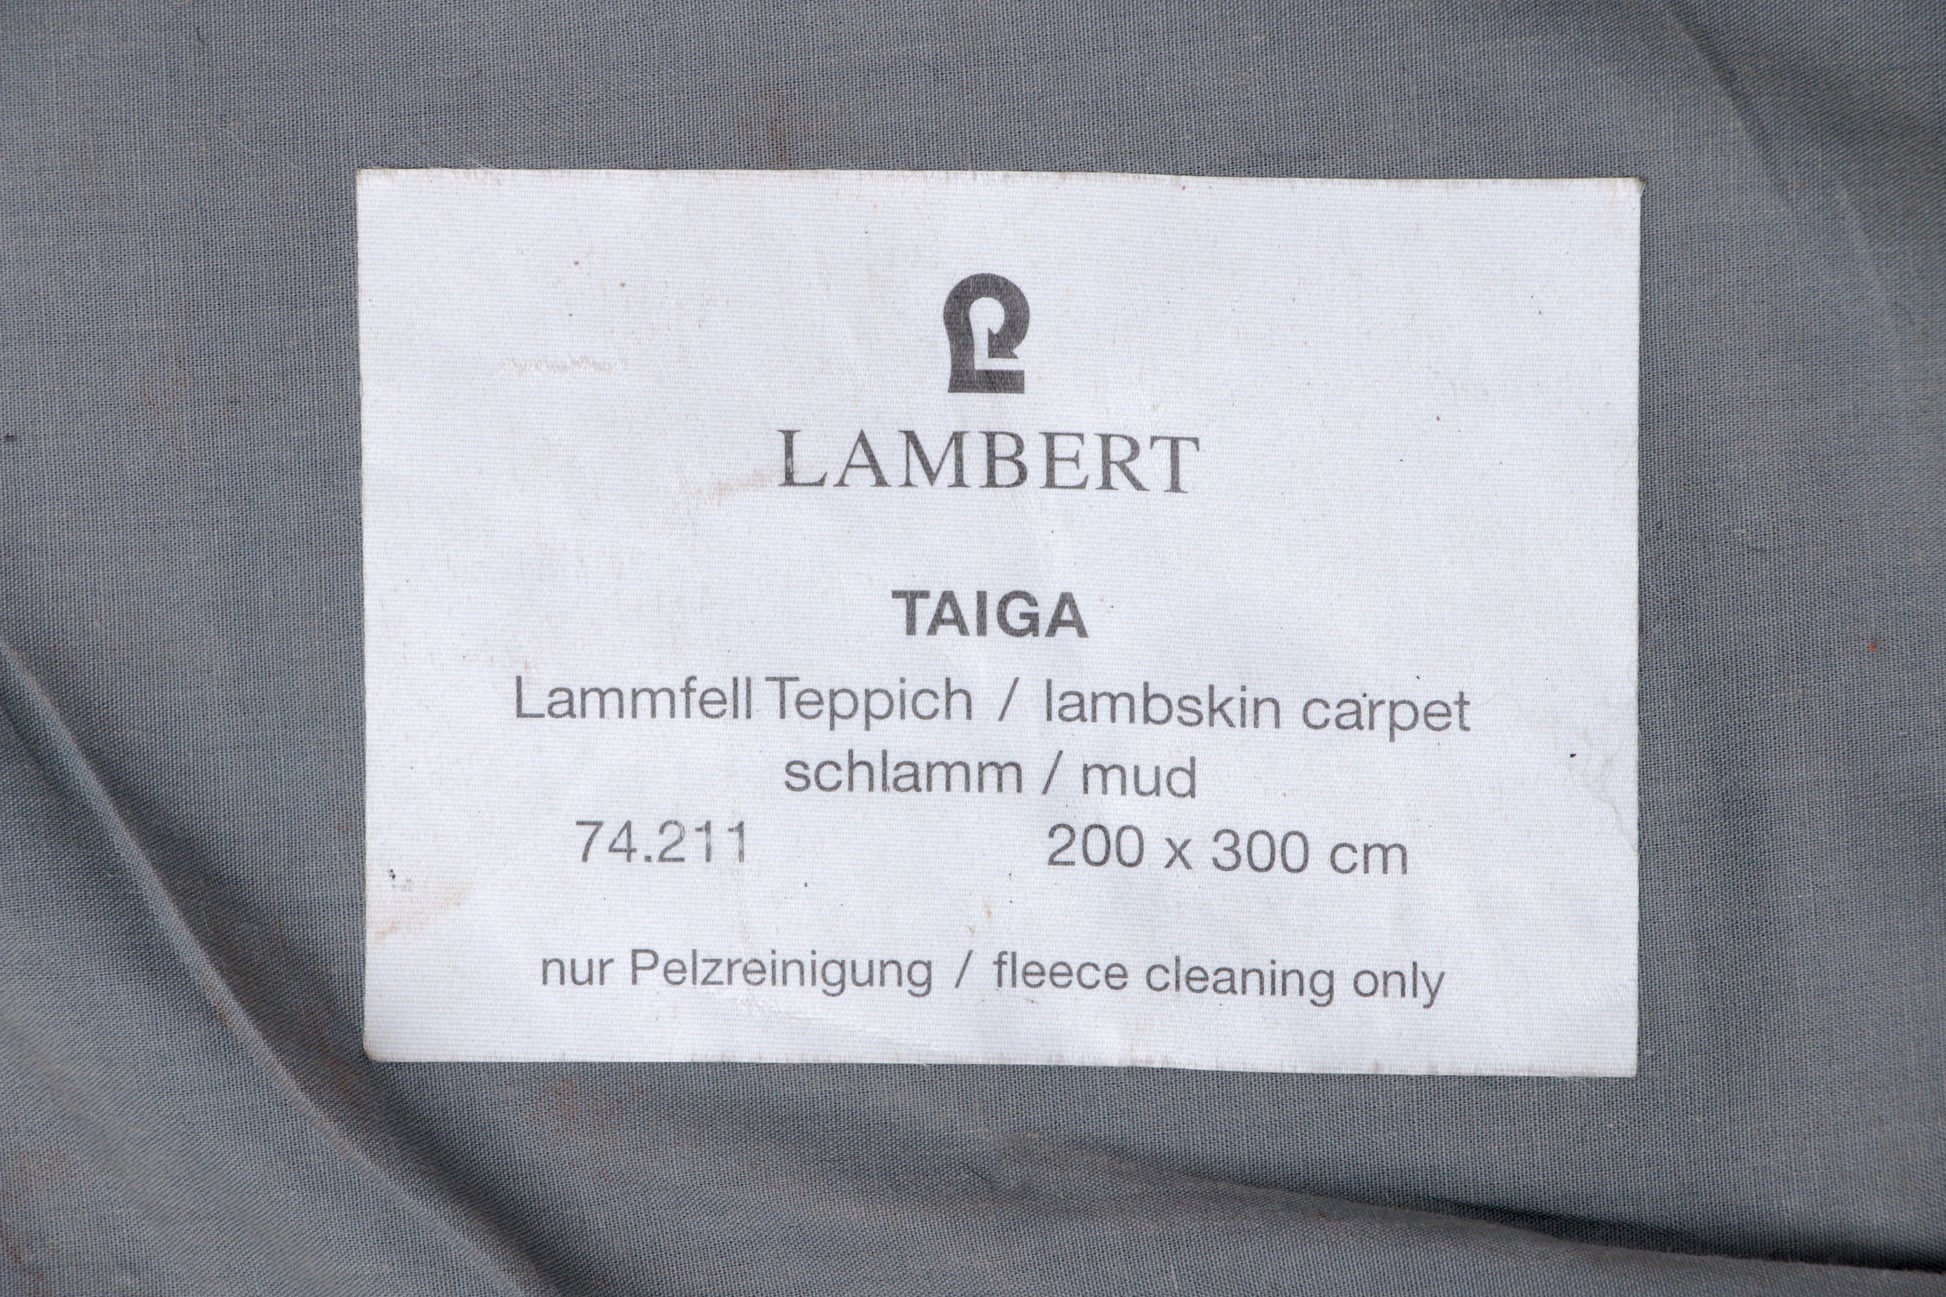 Vloerkleed van lamswol merk Taiga Lambert,1970 Duitsland.